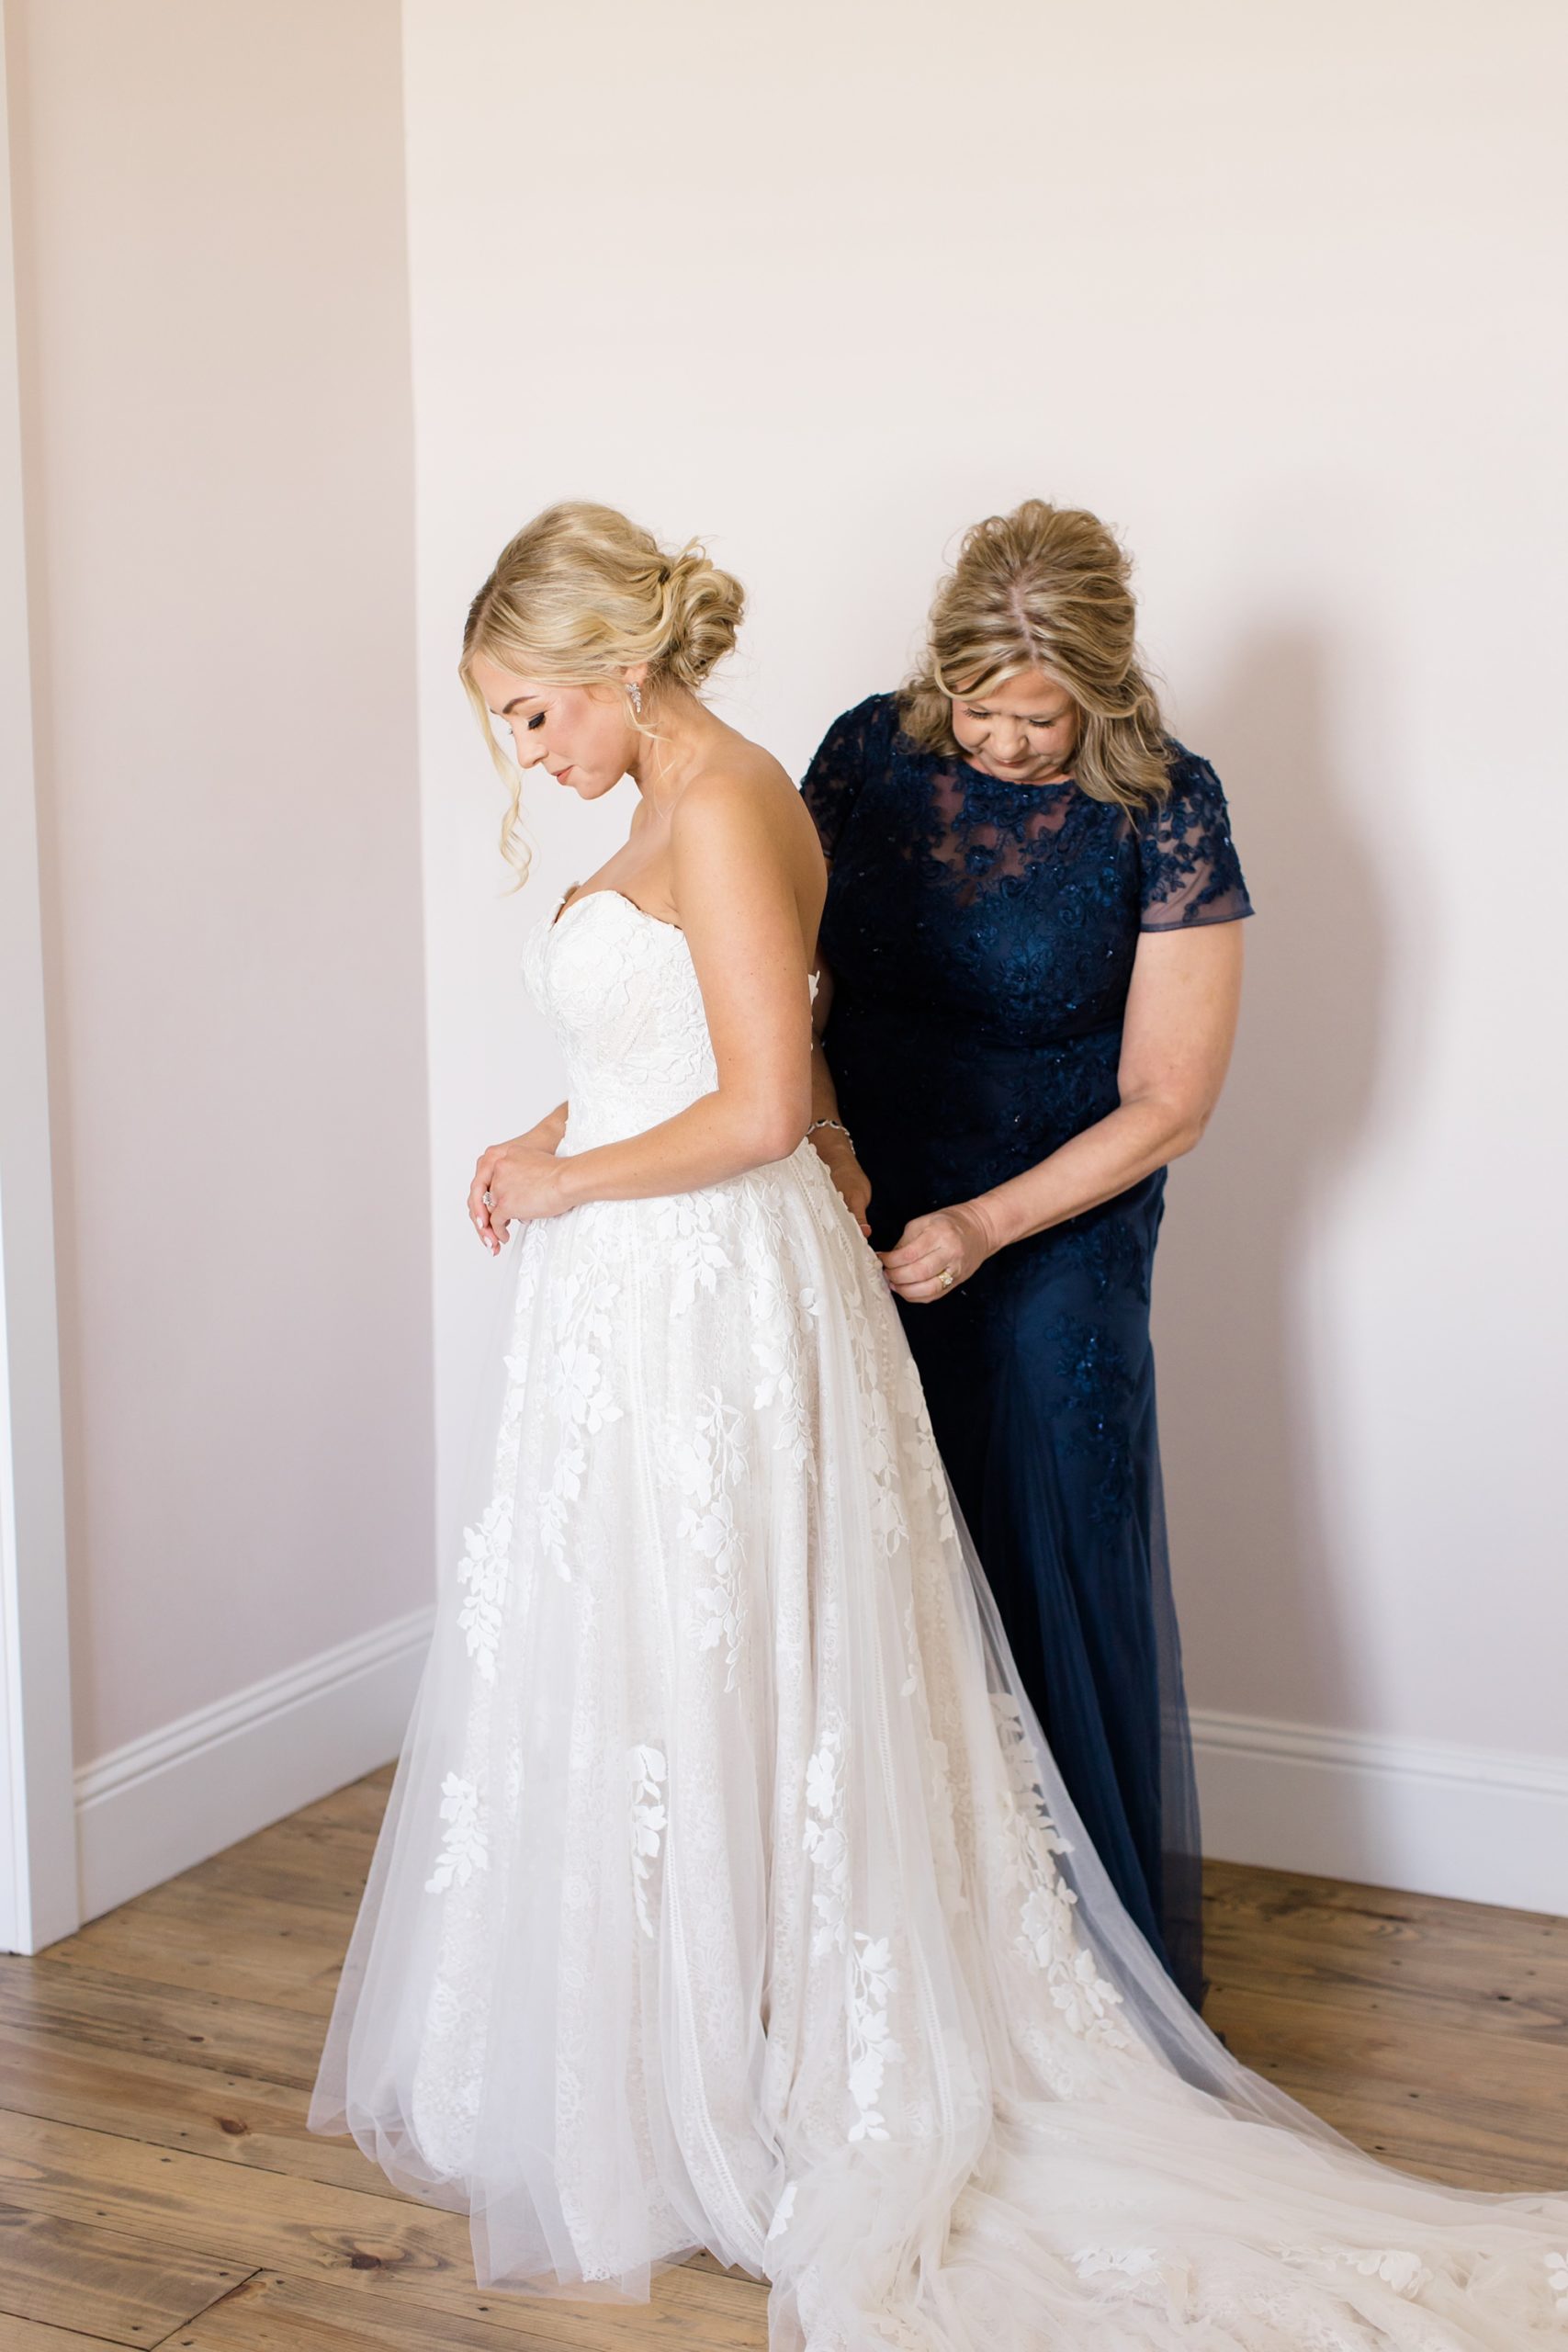 mother of bride helps her into wedding dress